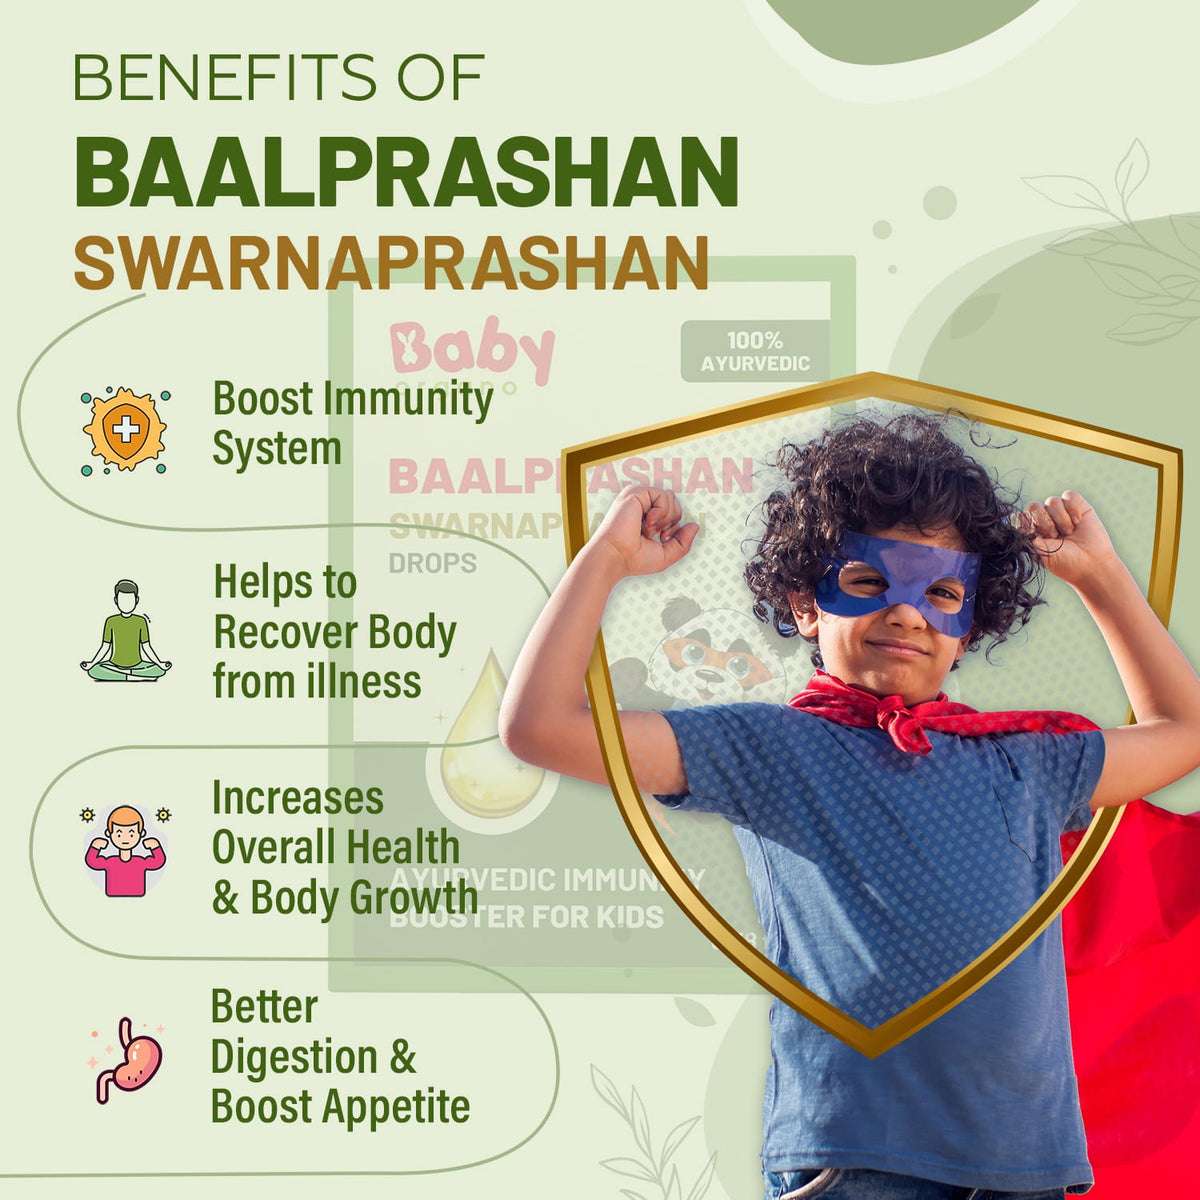 BabyOrgano Swarnaprashan Drops and Mosquito Repellent Spray Combo | Swarnaprashan Drops (15ml) + Mosquito Repellent Fabric Spray (100ml)